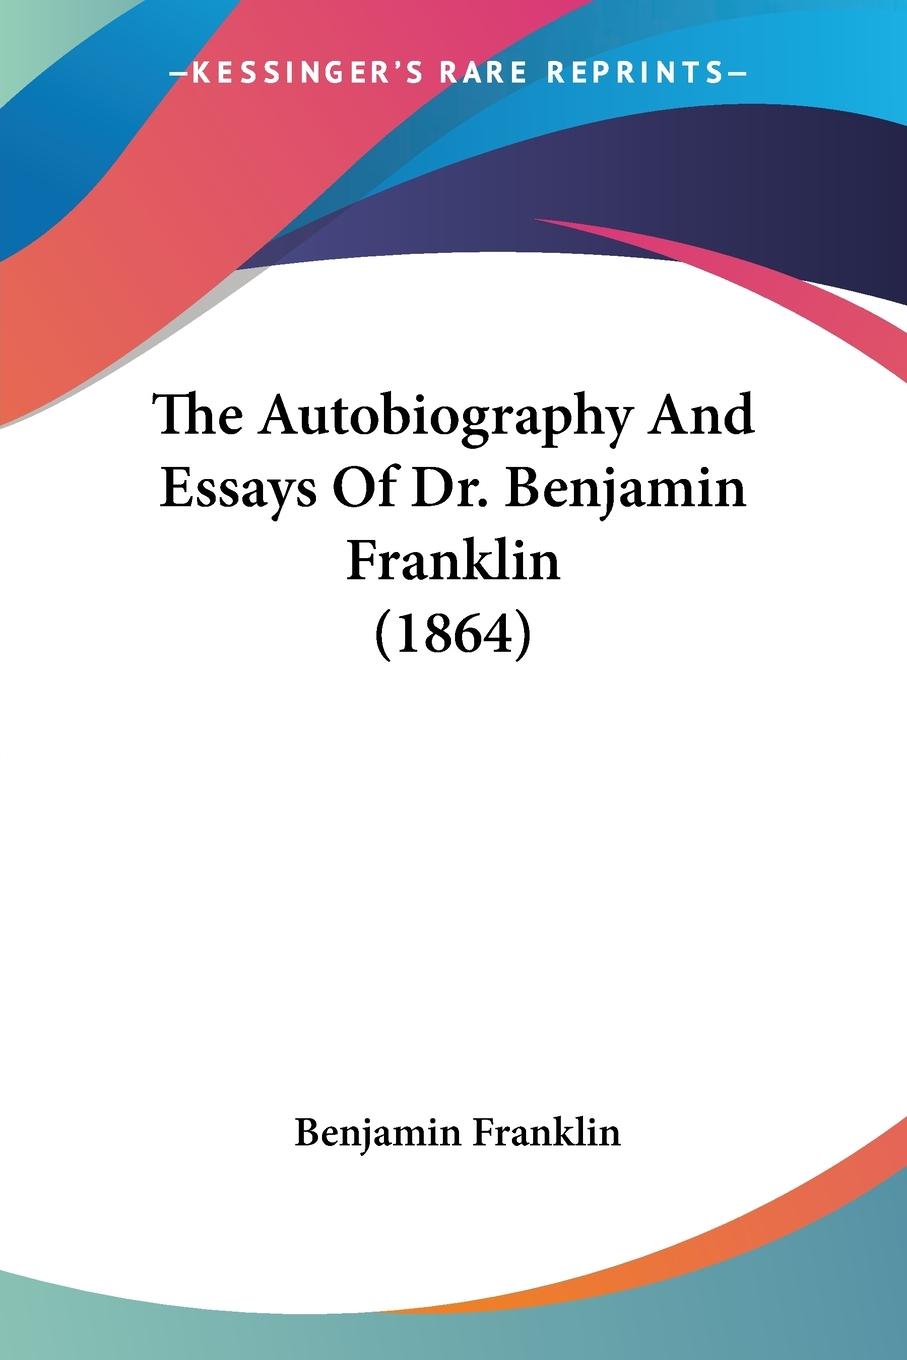 The Autobiography And Essays Of Dr. Benjamin Franklin (1864) - Franklin, Benjamin